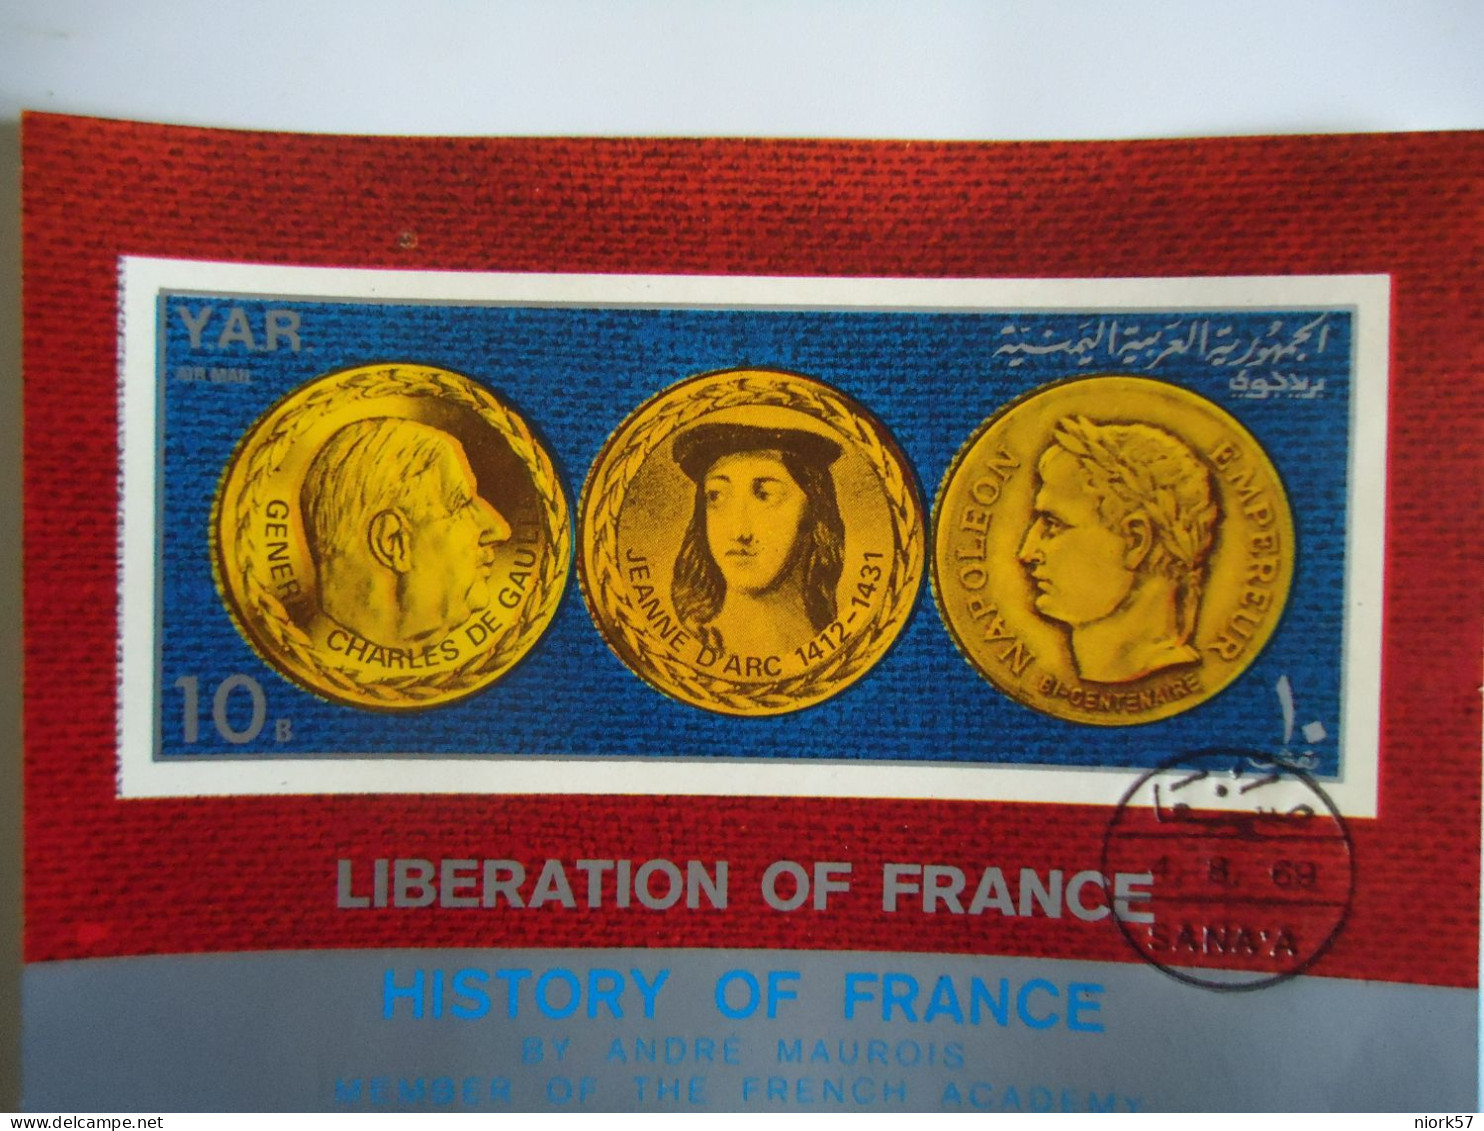 YEMEN  YAR  USED  SHEET HISTORY OF FRANCE COINS - Franz. Revolution